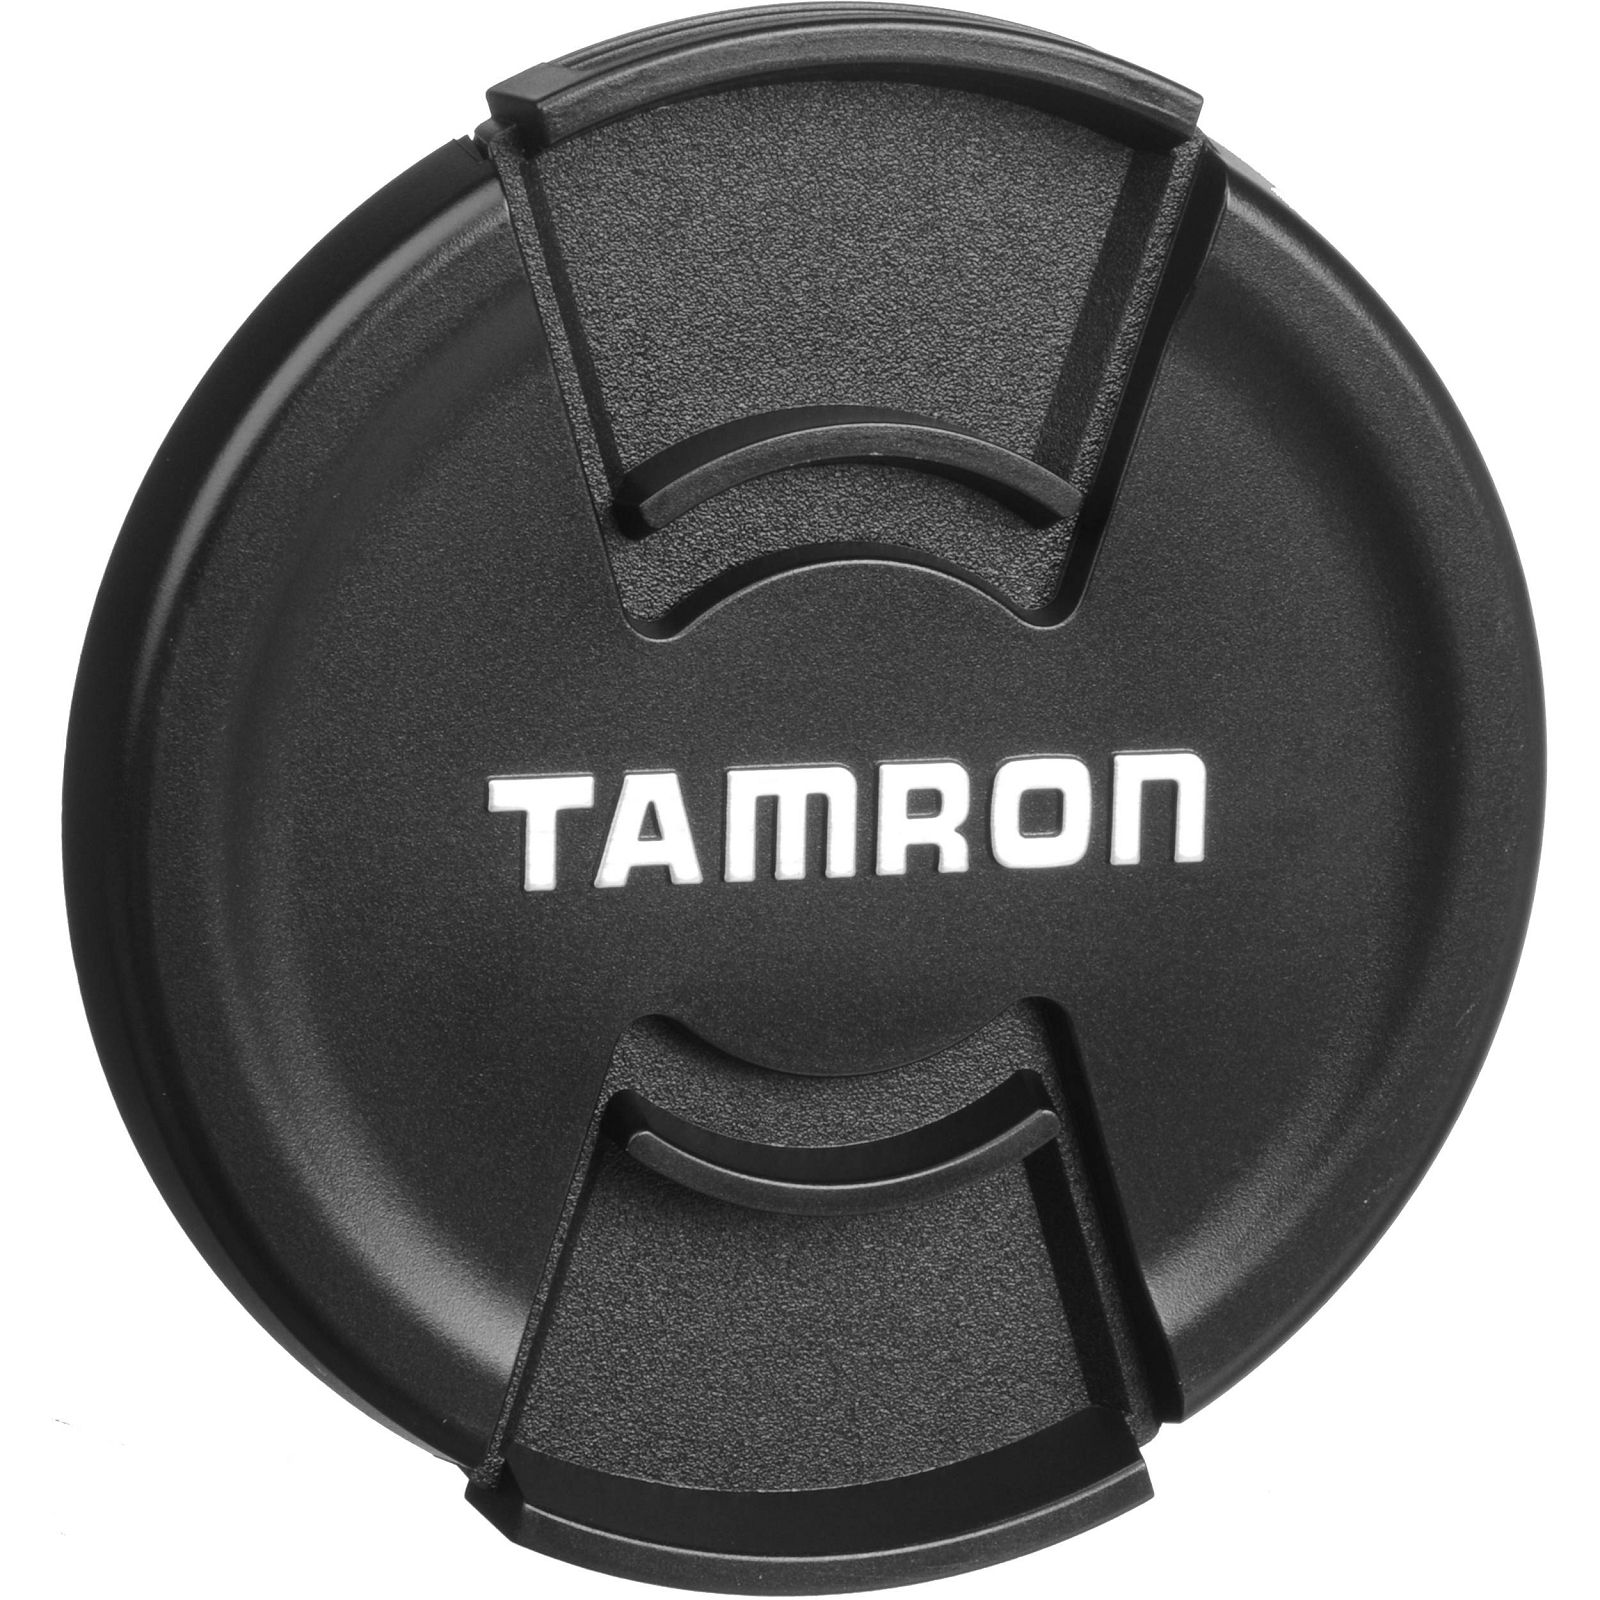 Tamron AF SP 180mm f/3.5 Di LD Aspherical FEC [IF] Macro 1:1 objektiv za Sony A-mount (B01S)